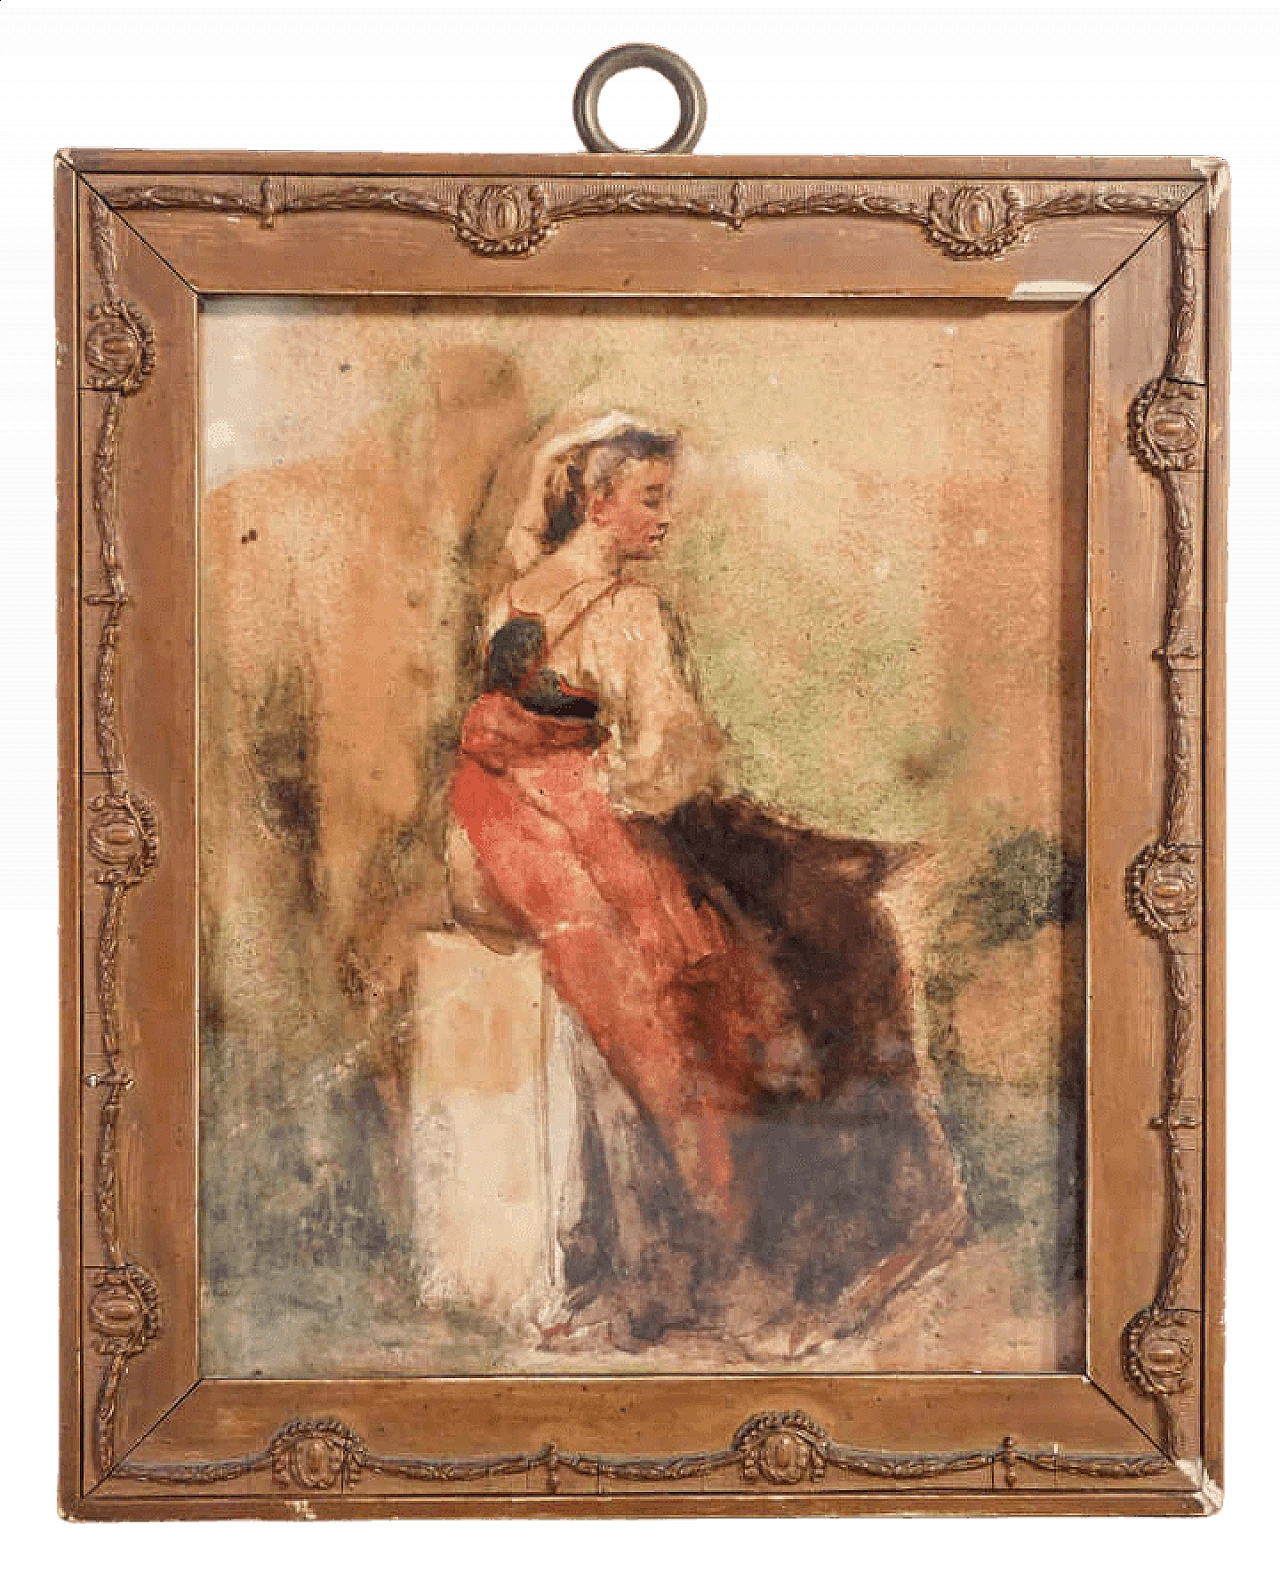 Giuseppe Bertini, female figure, watercolor on paper, 1848 8